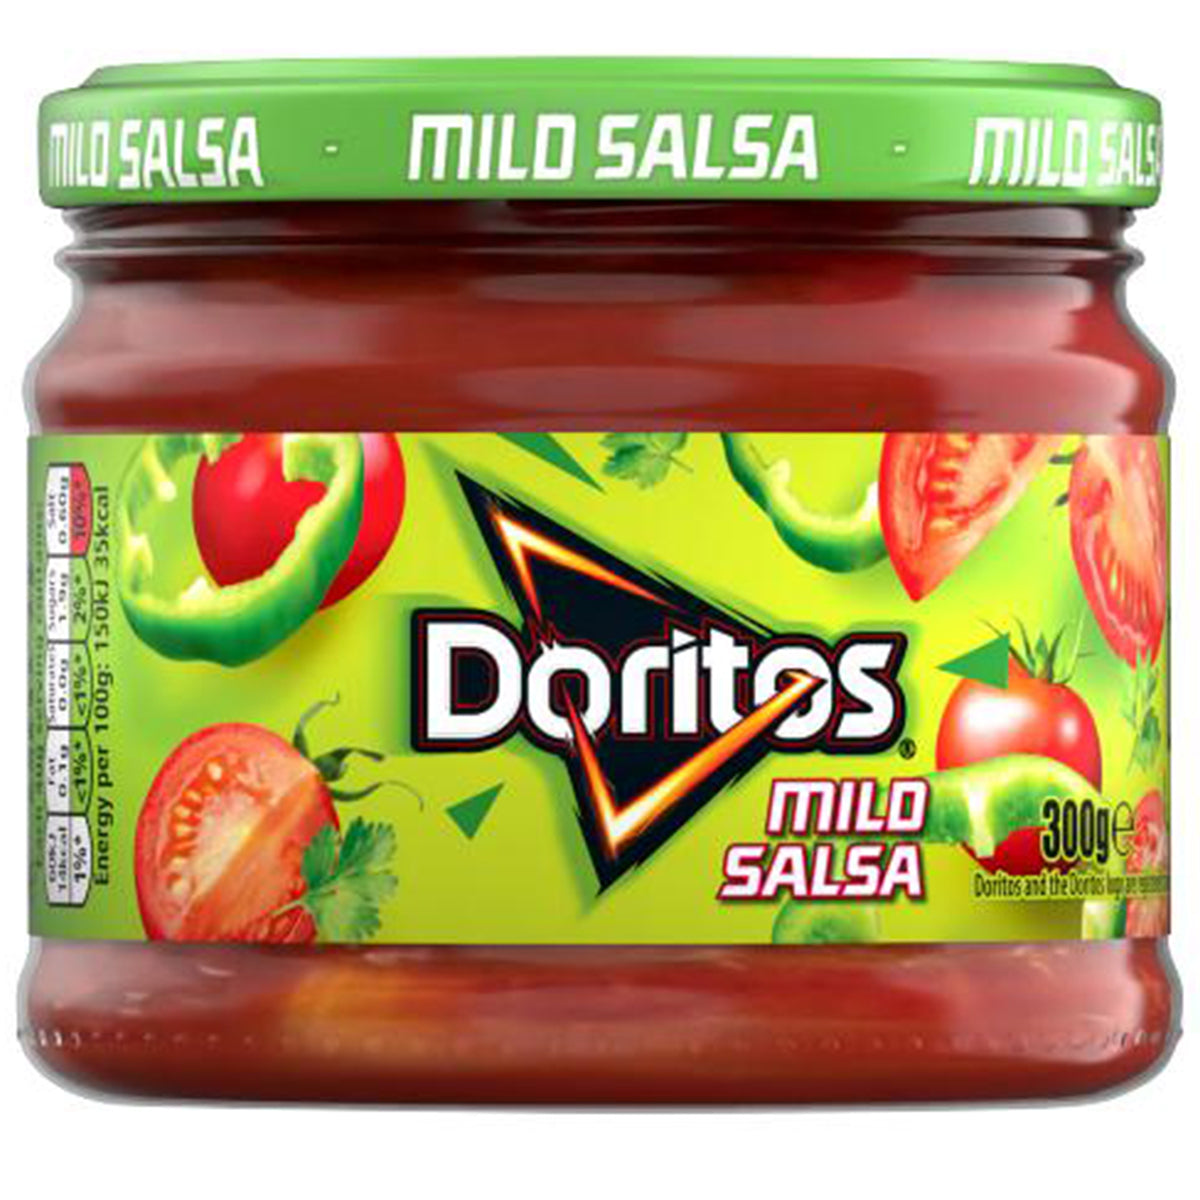 Doritos - Mild Salsa Sharing Dip - 300g - Continental Food Store